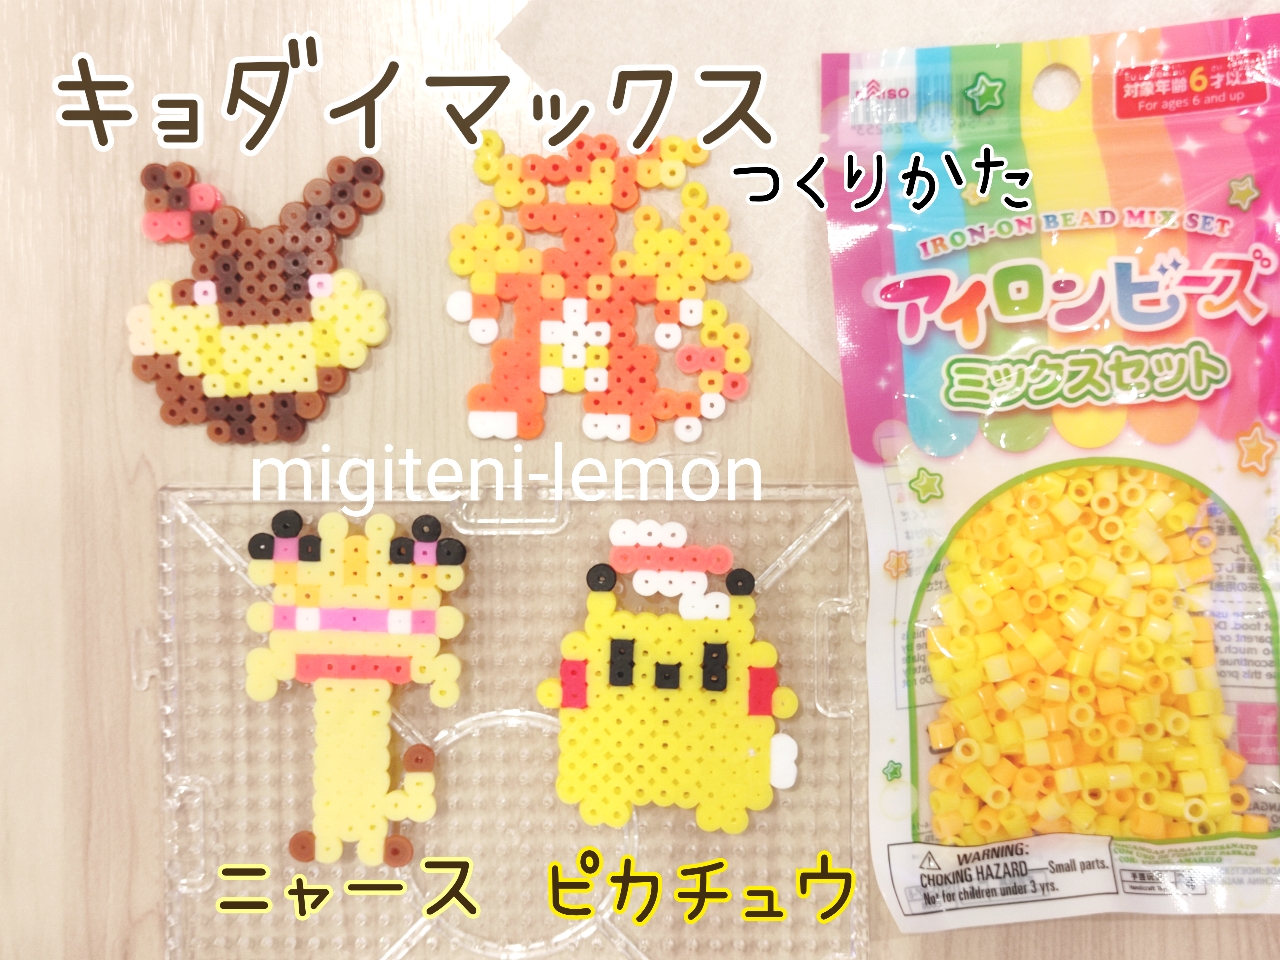 kyodaimax-giantmax-pikachu-nyarth-meowth-kawaii-beads-handmade